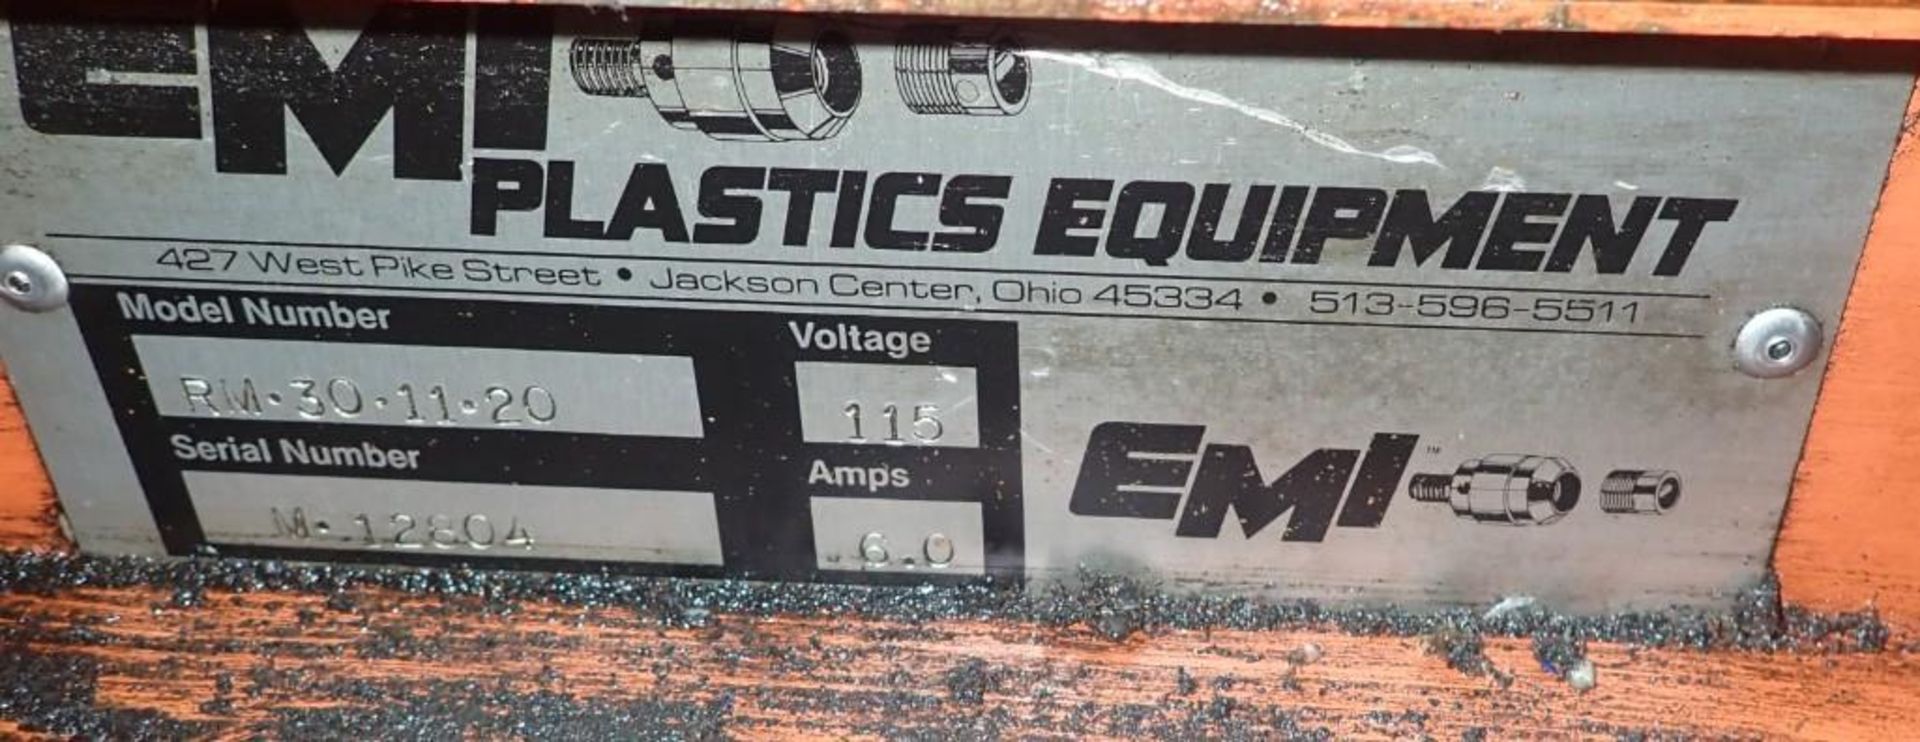 EMI Plastics Equipment #RM-30-11-20 Belt Conveyor - Image 5 of 5